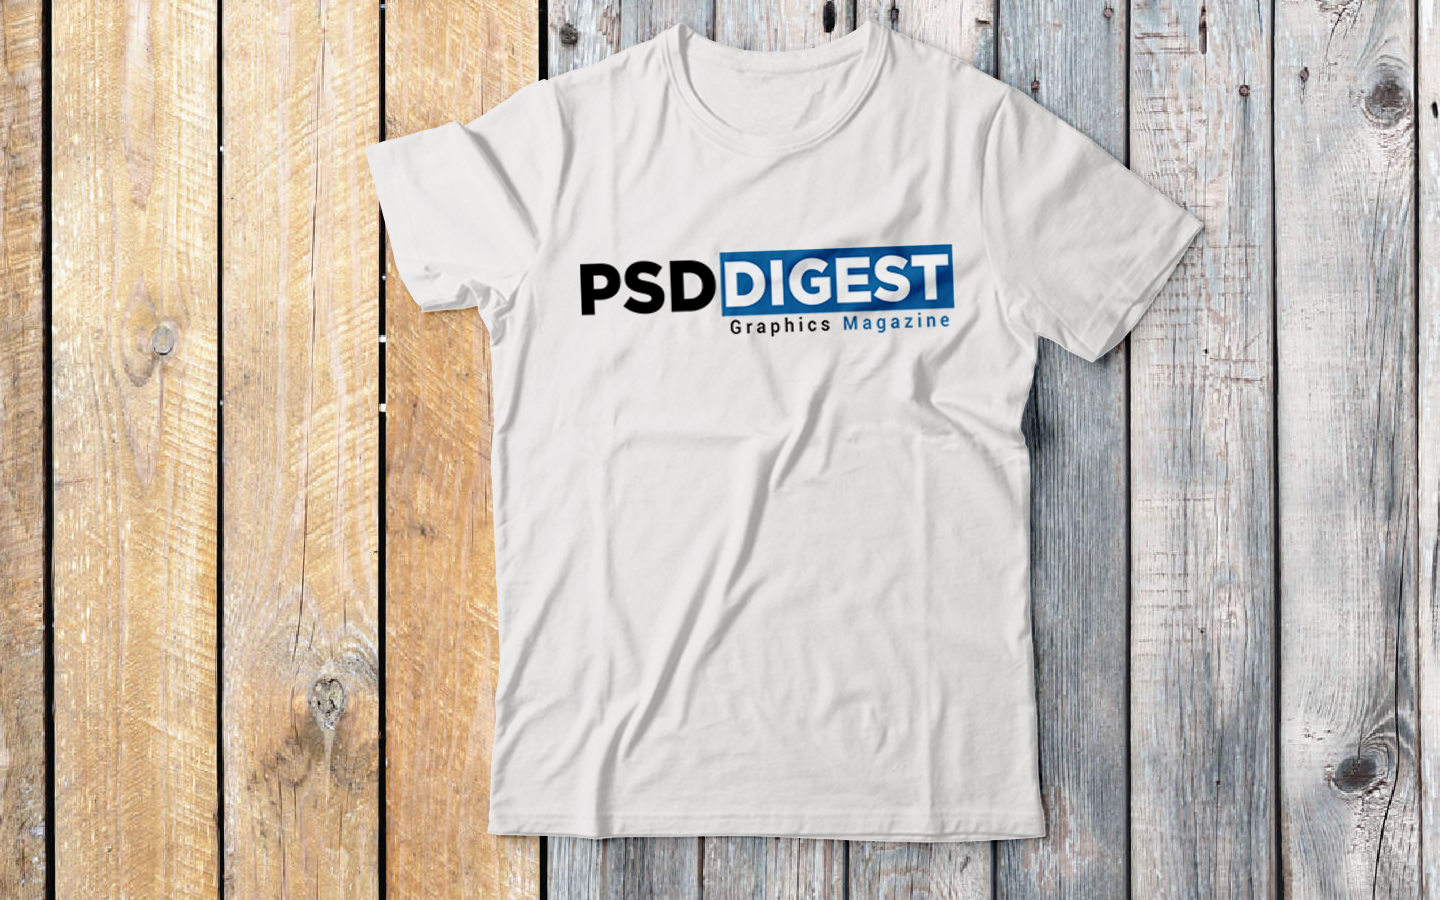 Download Free White T-Shirt Mockup PSD by PSDDigest on DeviantArt